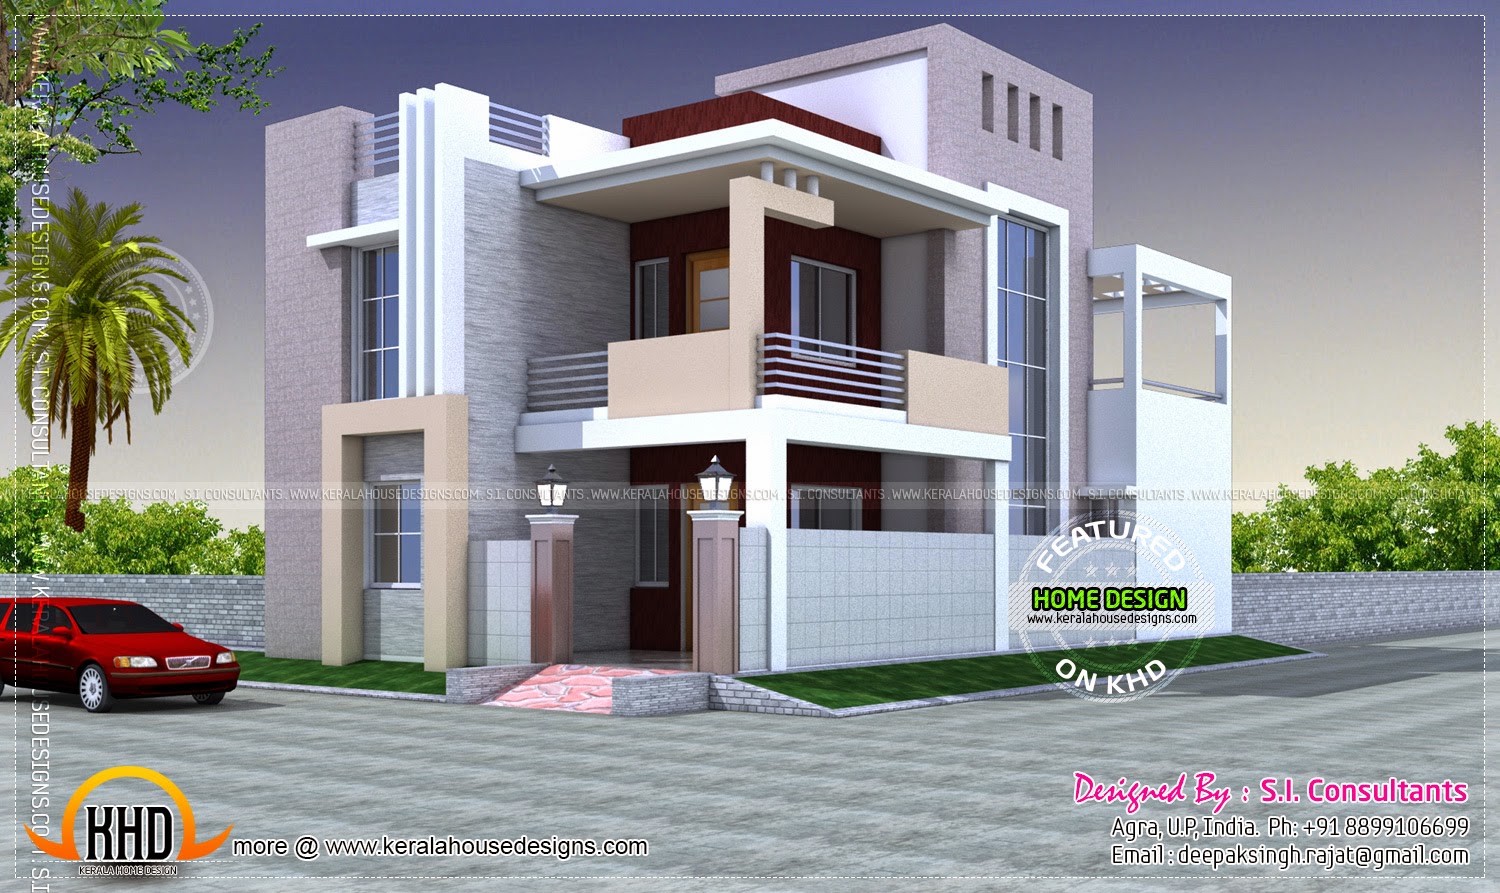 House exterior elevation modern style - Kerala home design ...